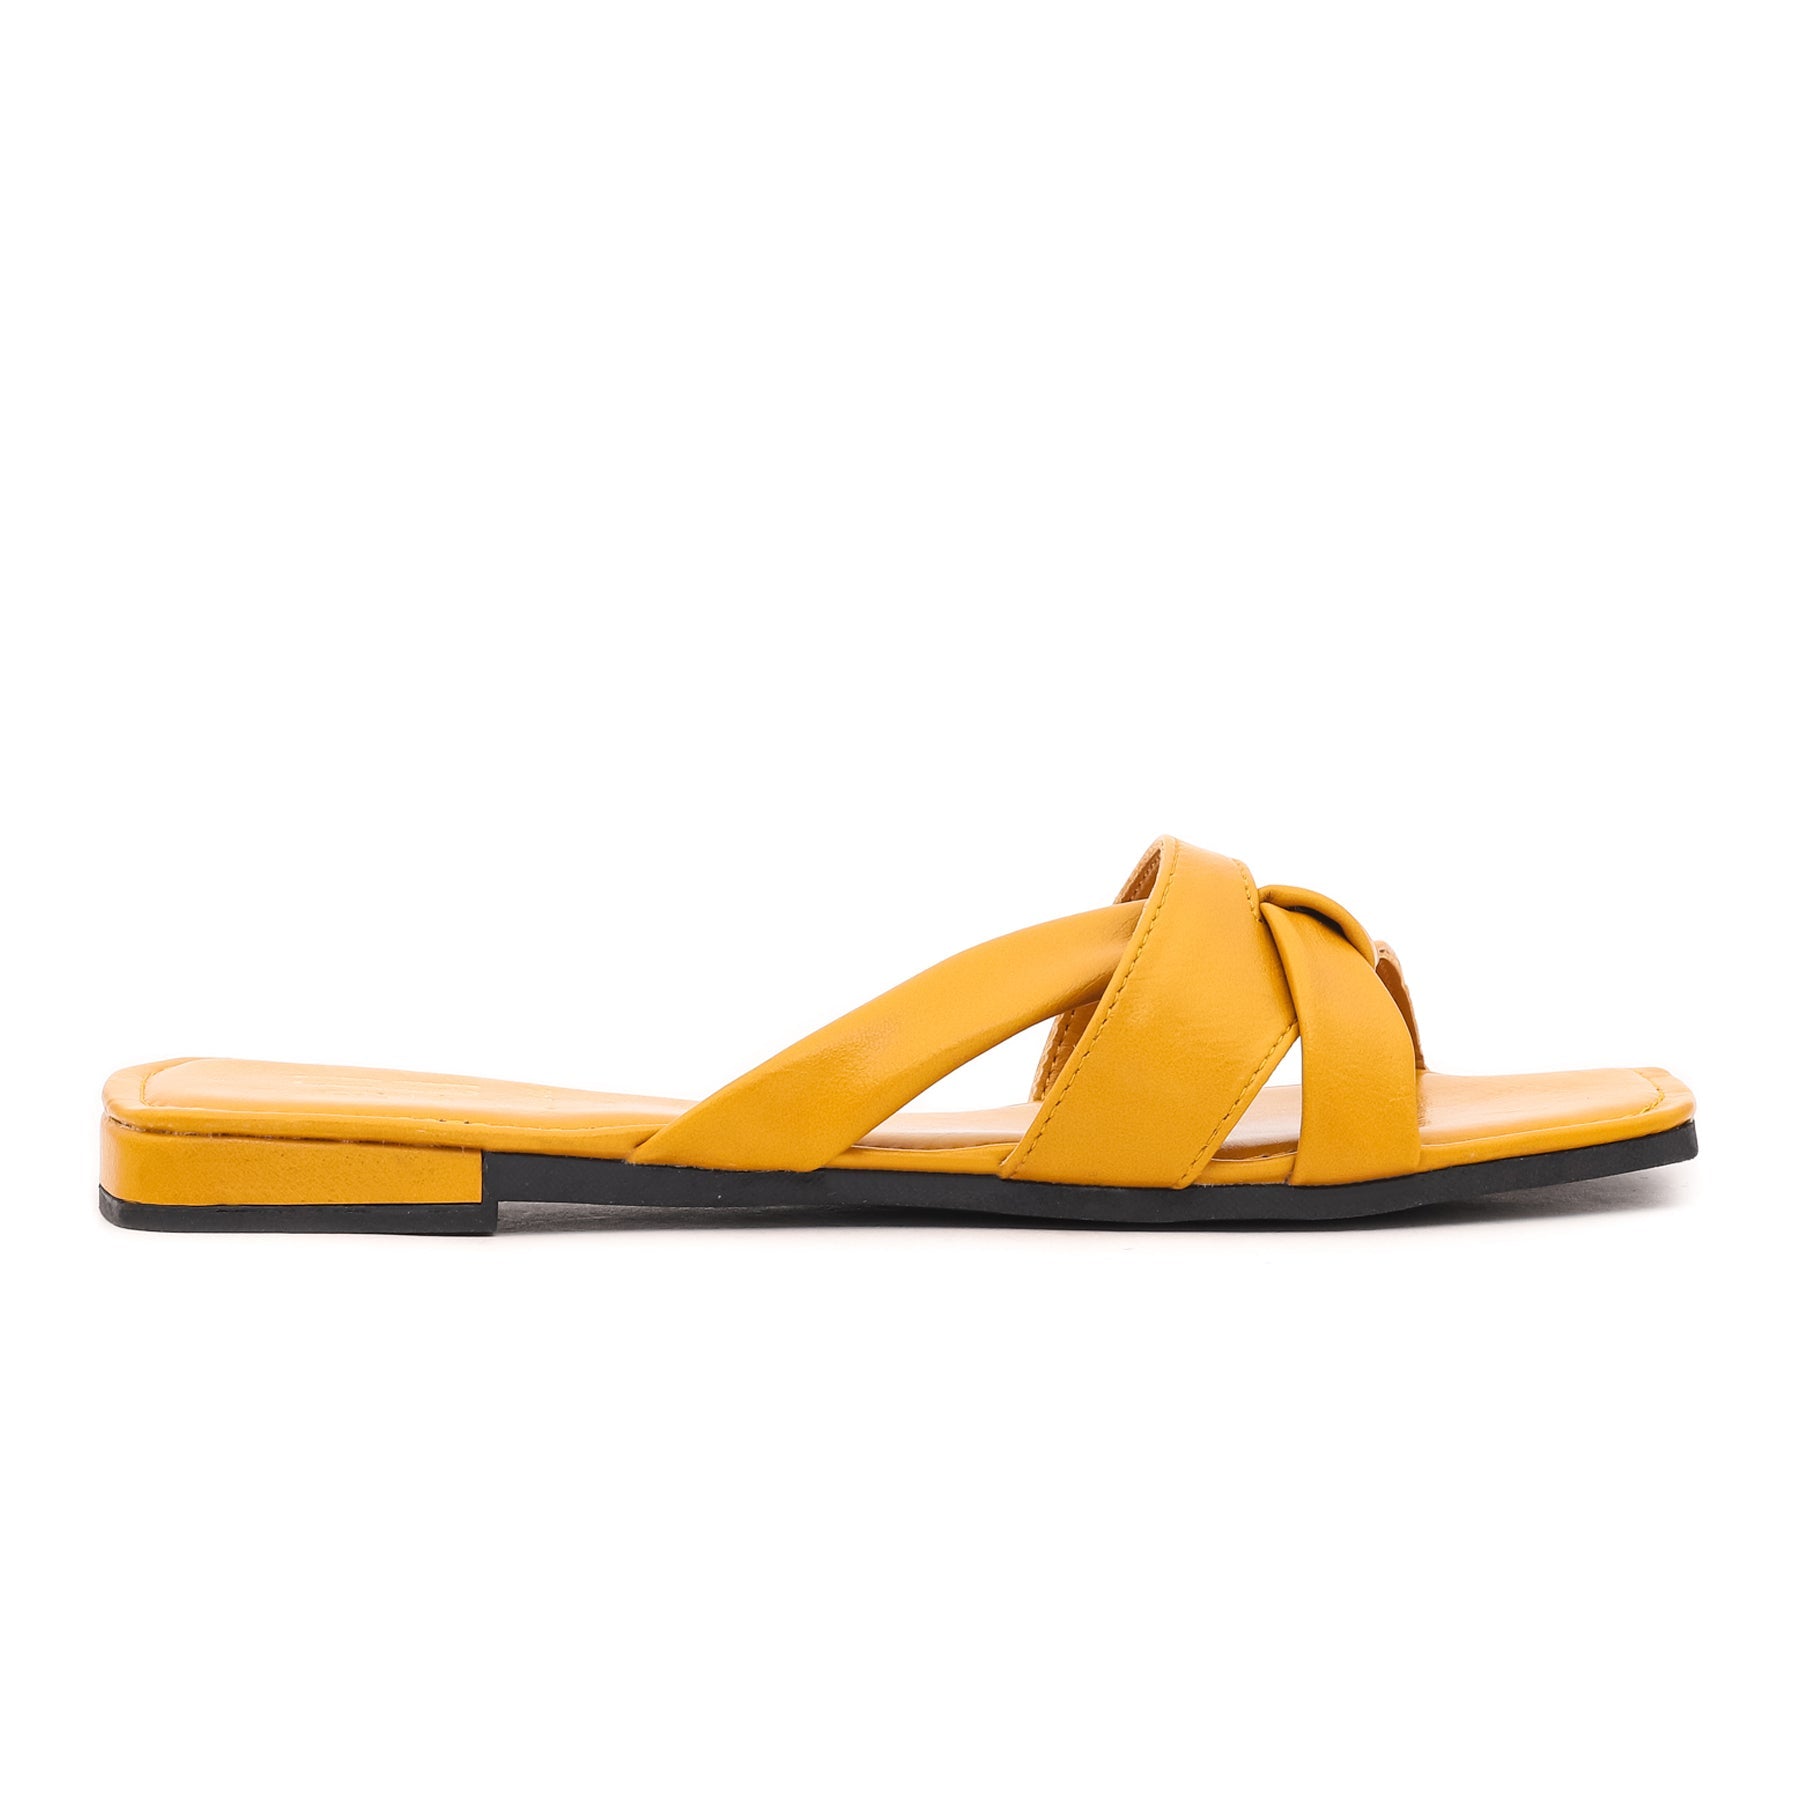 Yellow Formal Slipper FR8046